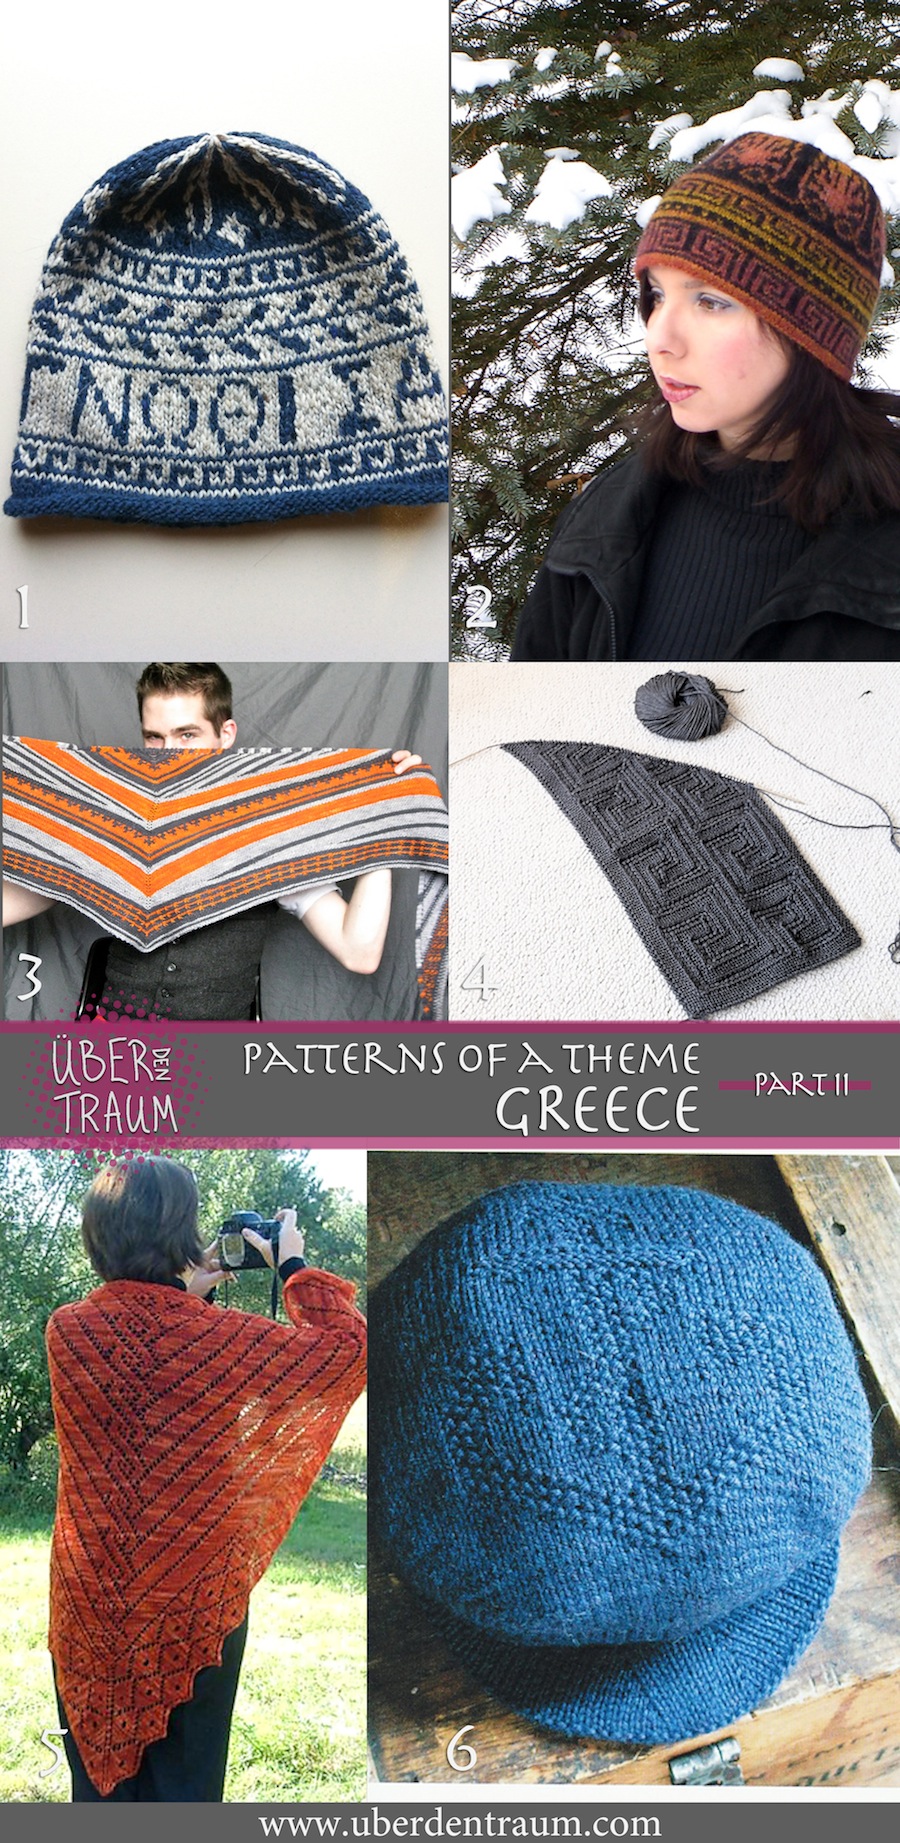 Patterns of a theme: Greece, pt2